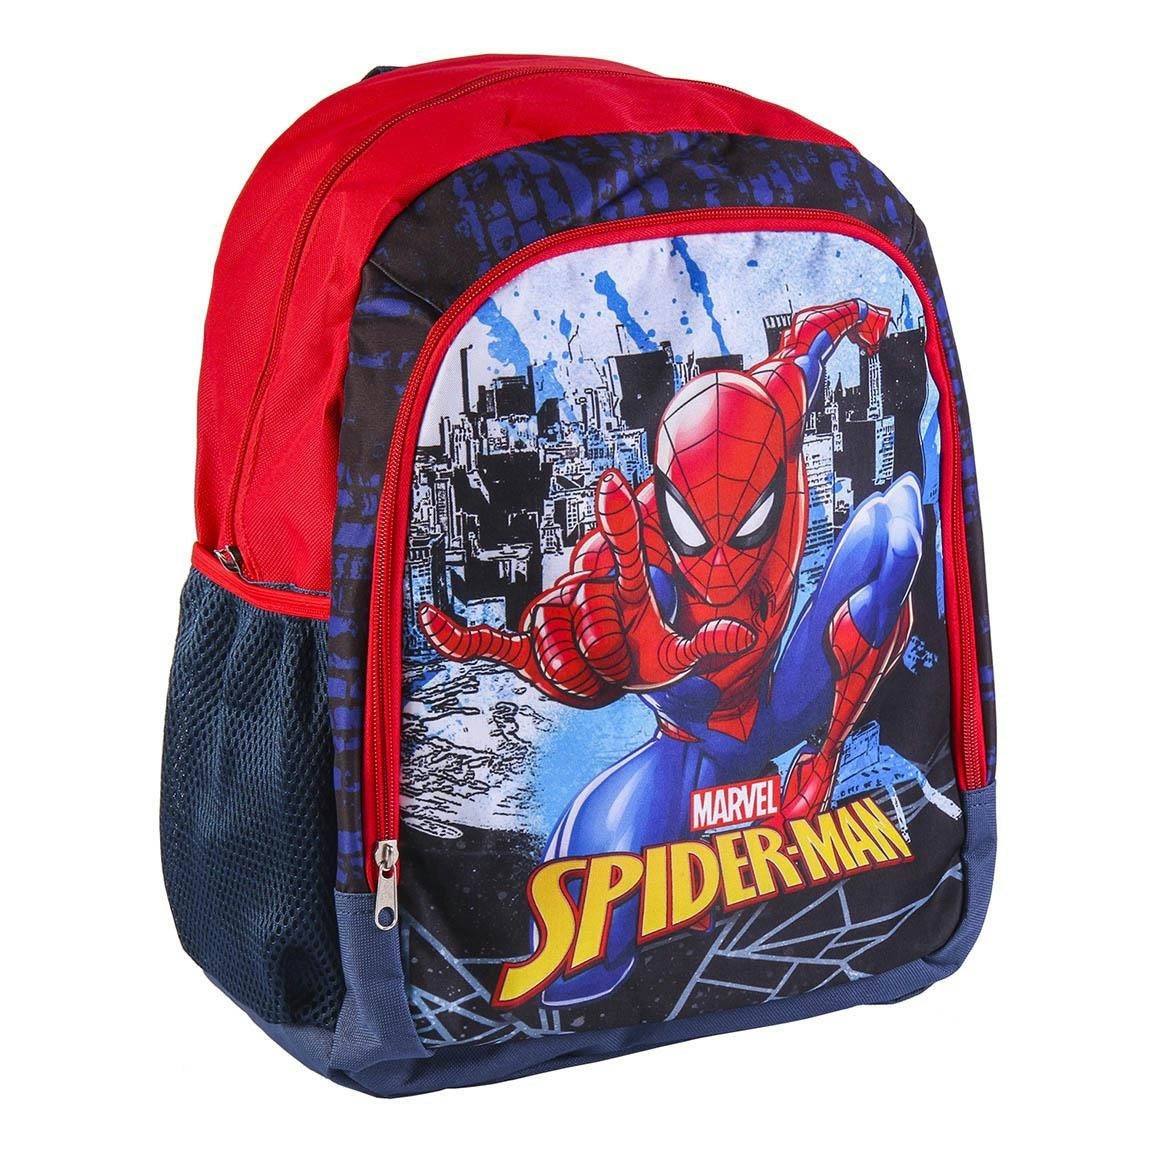 Spiderman ryggsäck - Spindelmannen skolväska